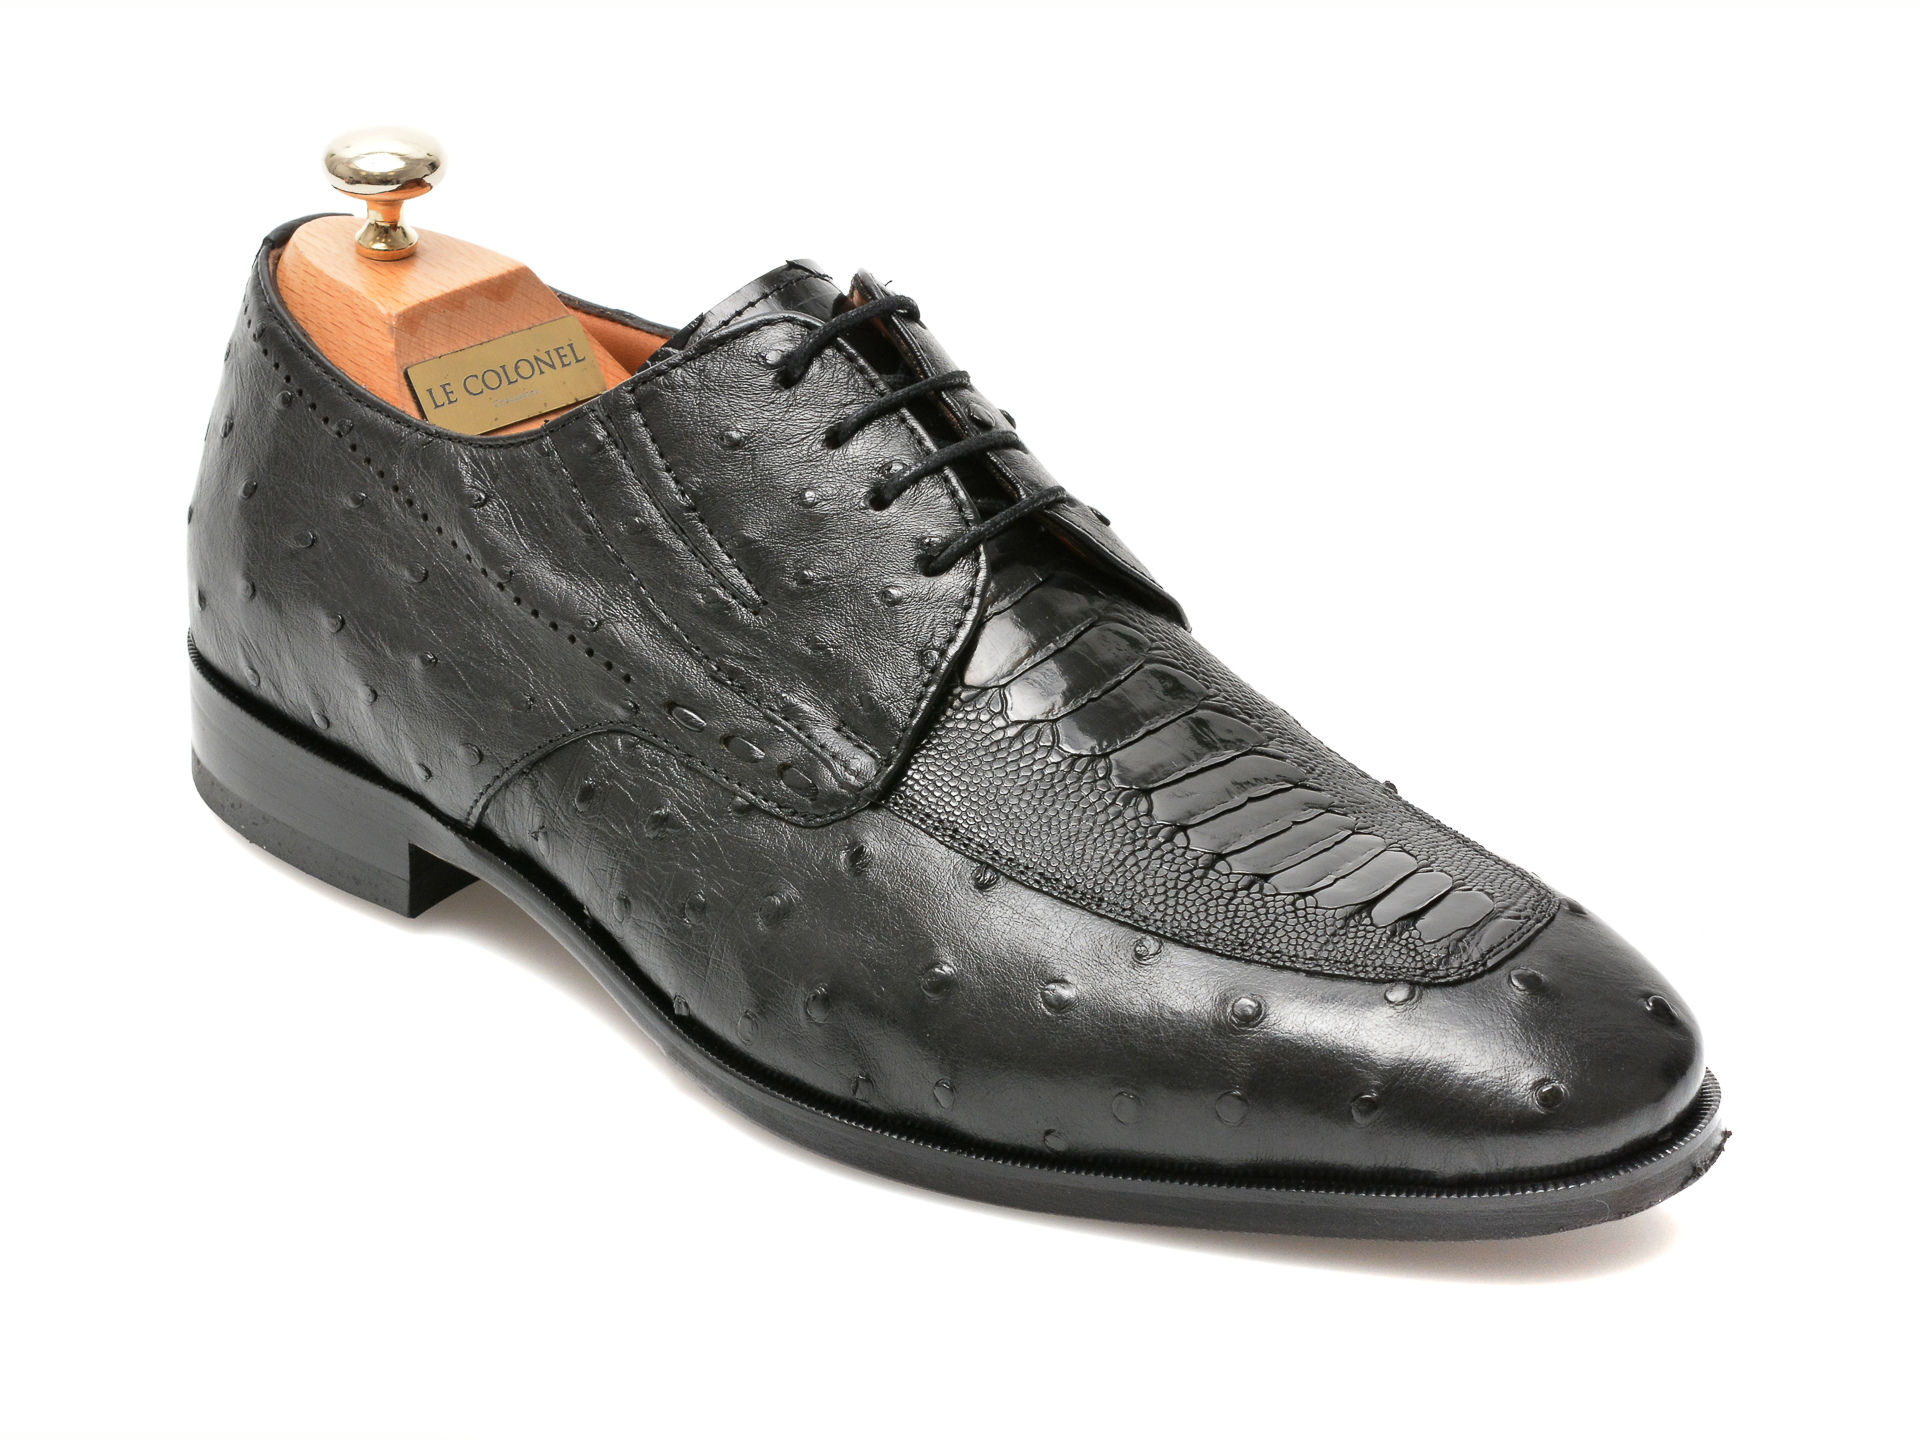 Pantofi LE COLONEL negri, 48701, din piele naturala Le Colonel imagine 2022 13clothing.ro